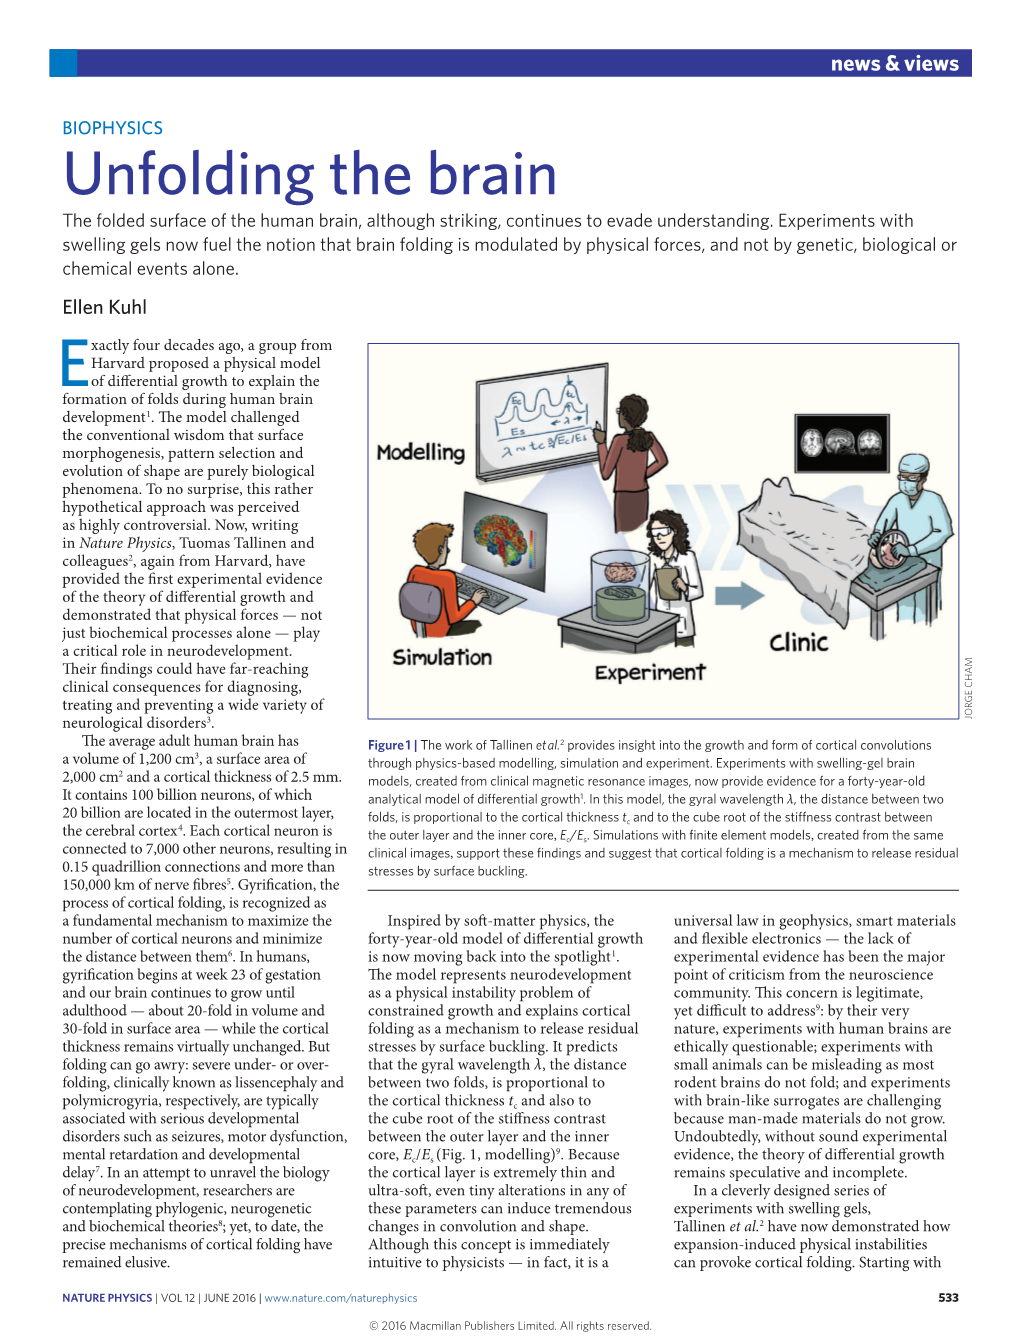 Biophysics: Unfolding the Brain